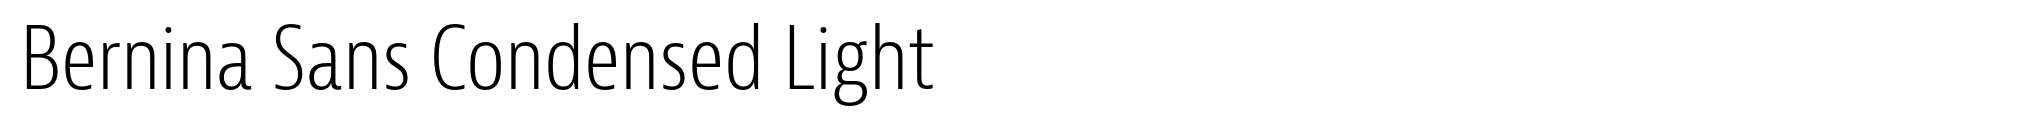 Bernina Sans Condensed Light image